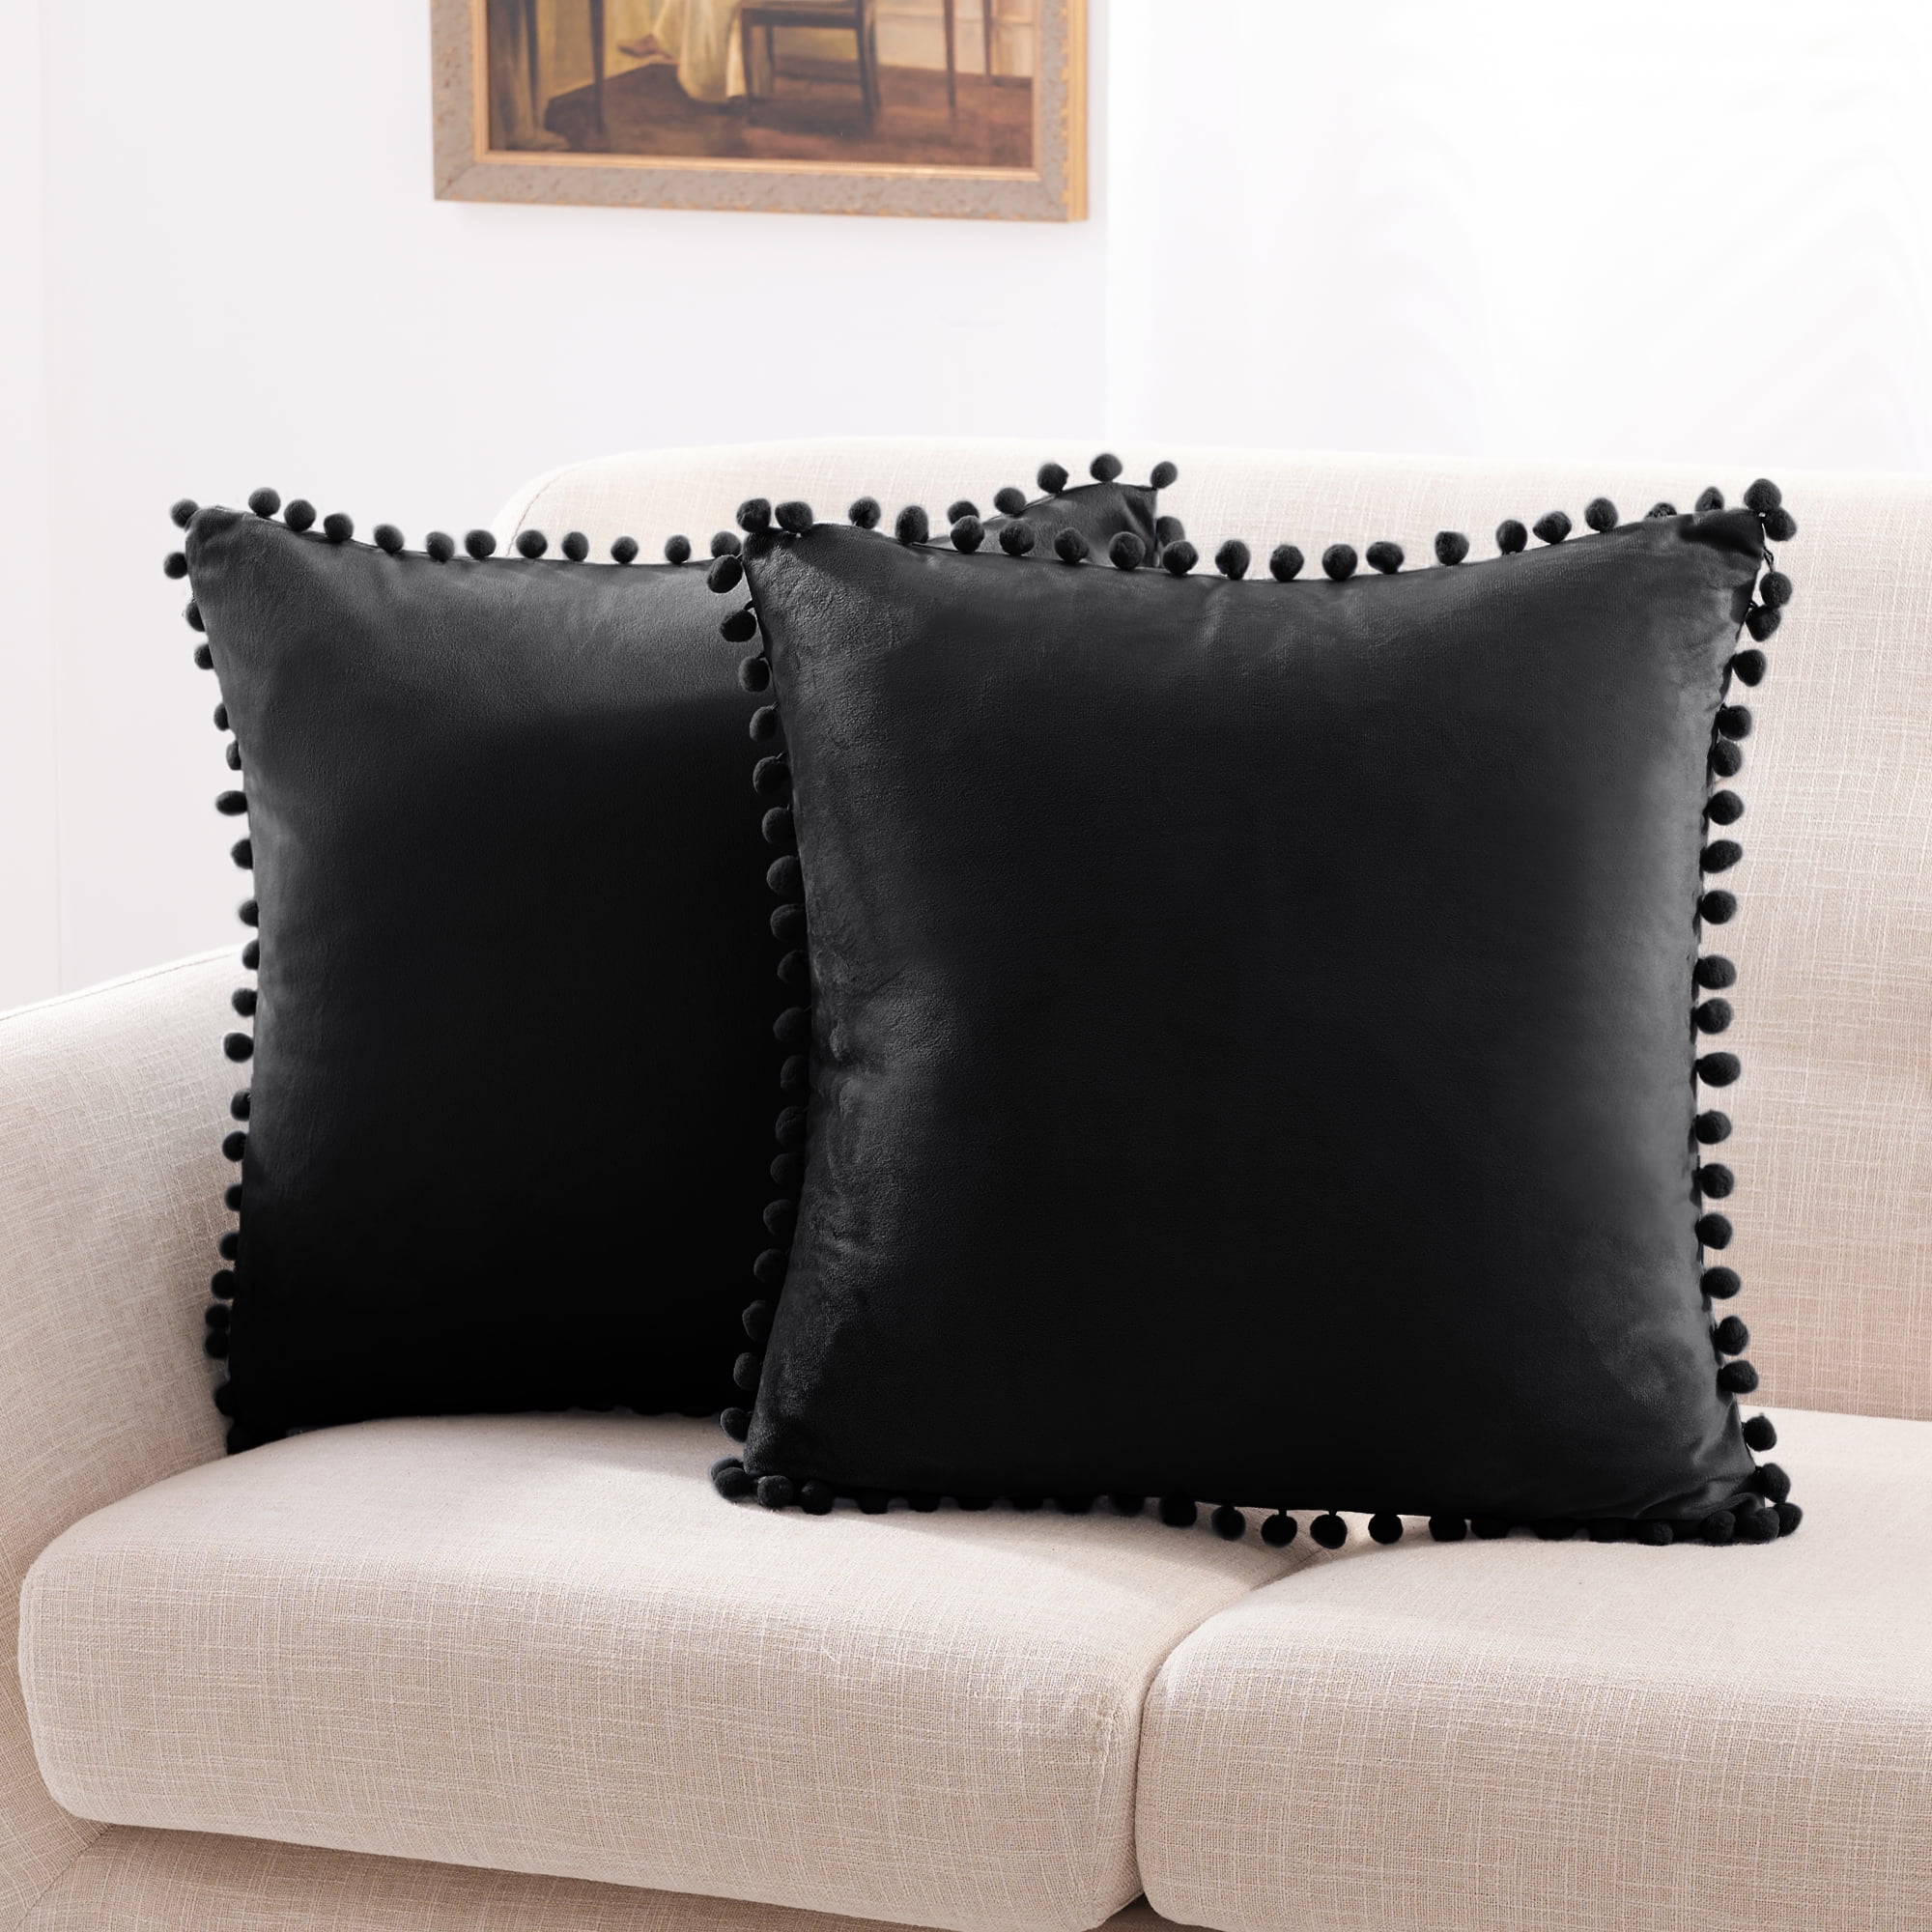 Pair of Crushed Velvet Cushion Covers 24x24 in Large Plain Plush Sofa Pillows 